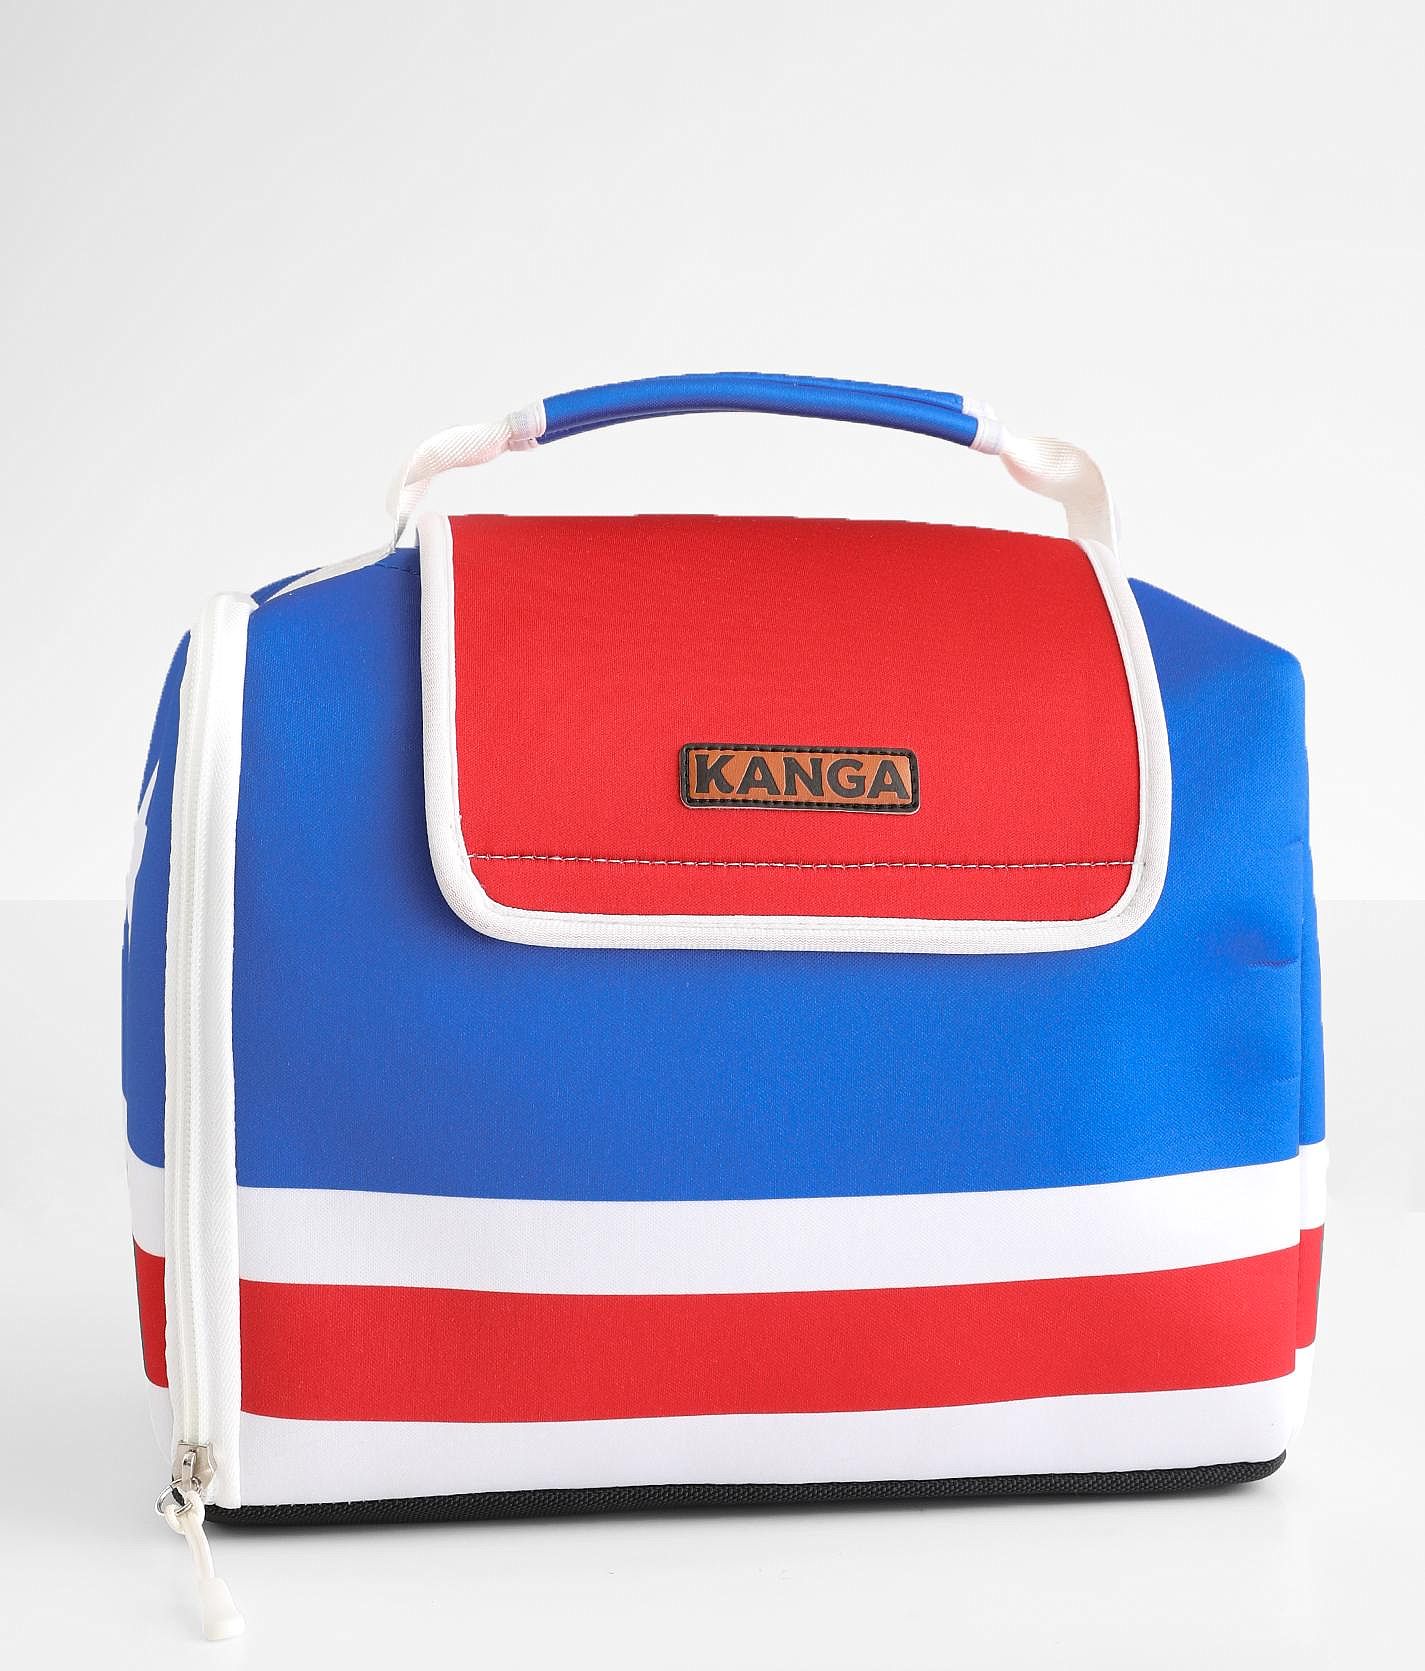 Kanga Realtree 12 Pack Kase Mate Cooler - Men's Bags in Camo